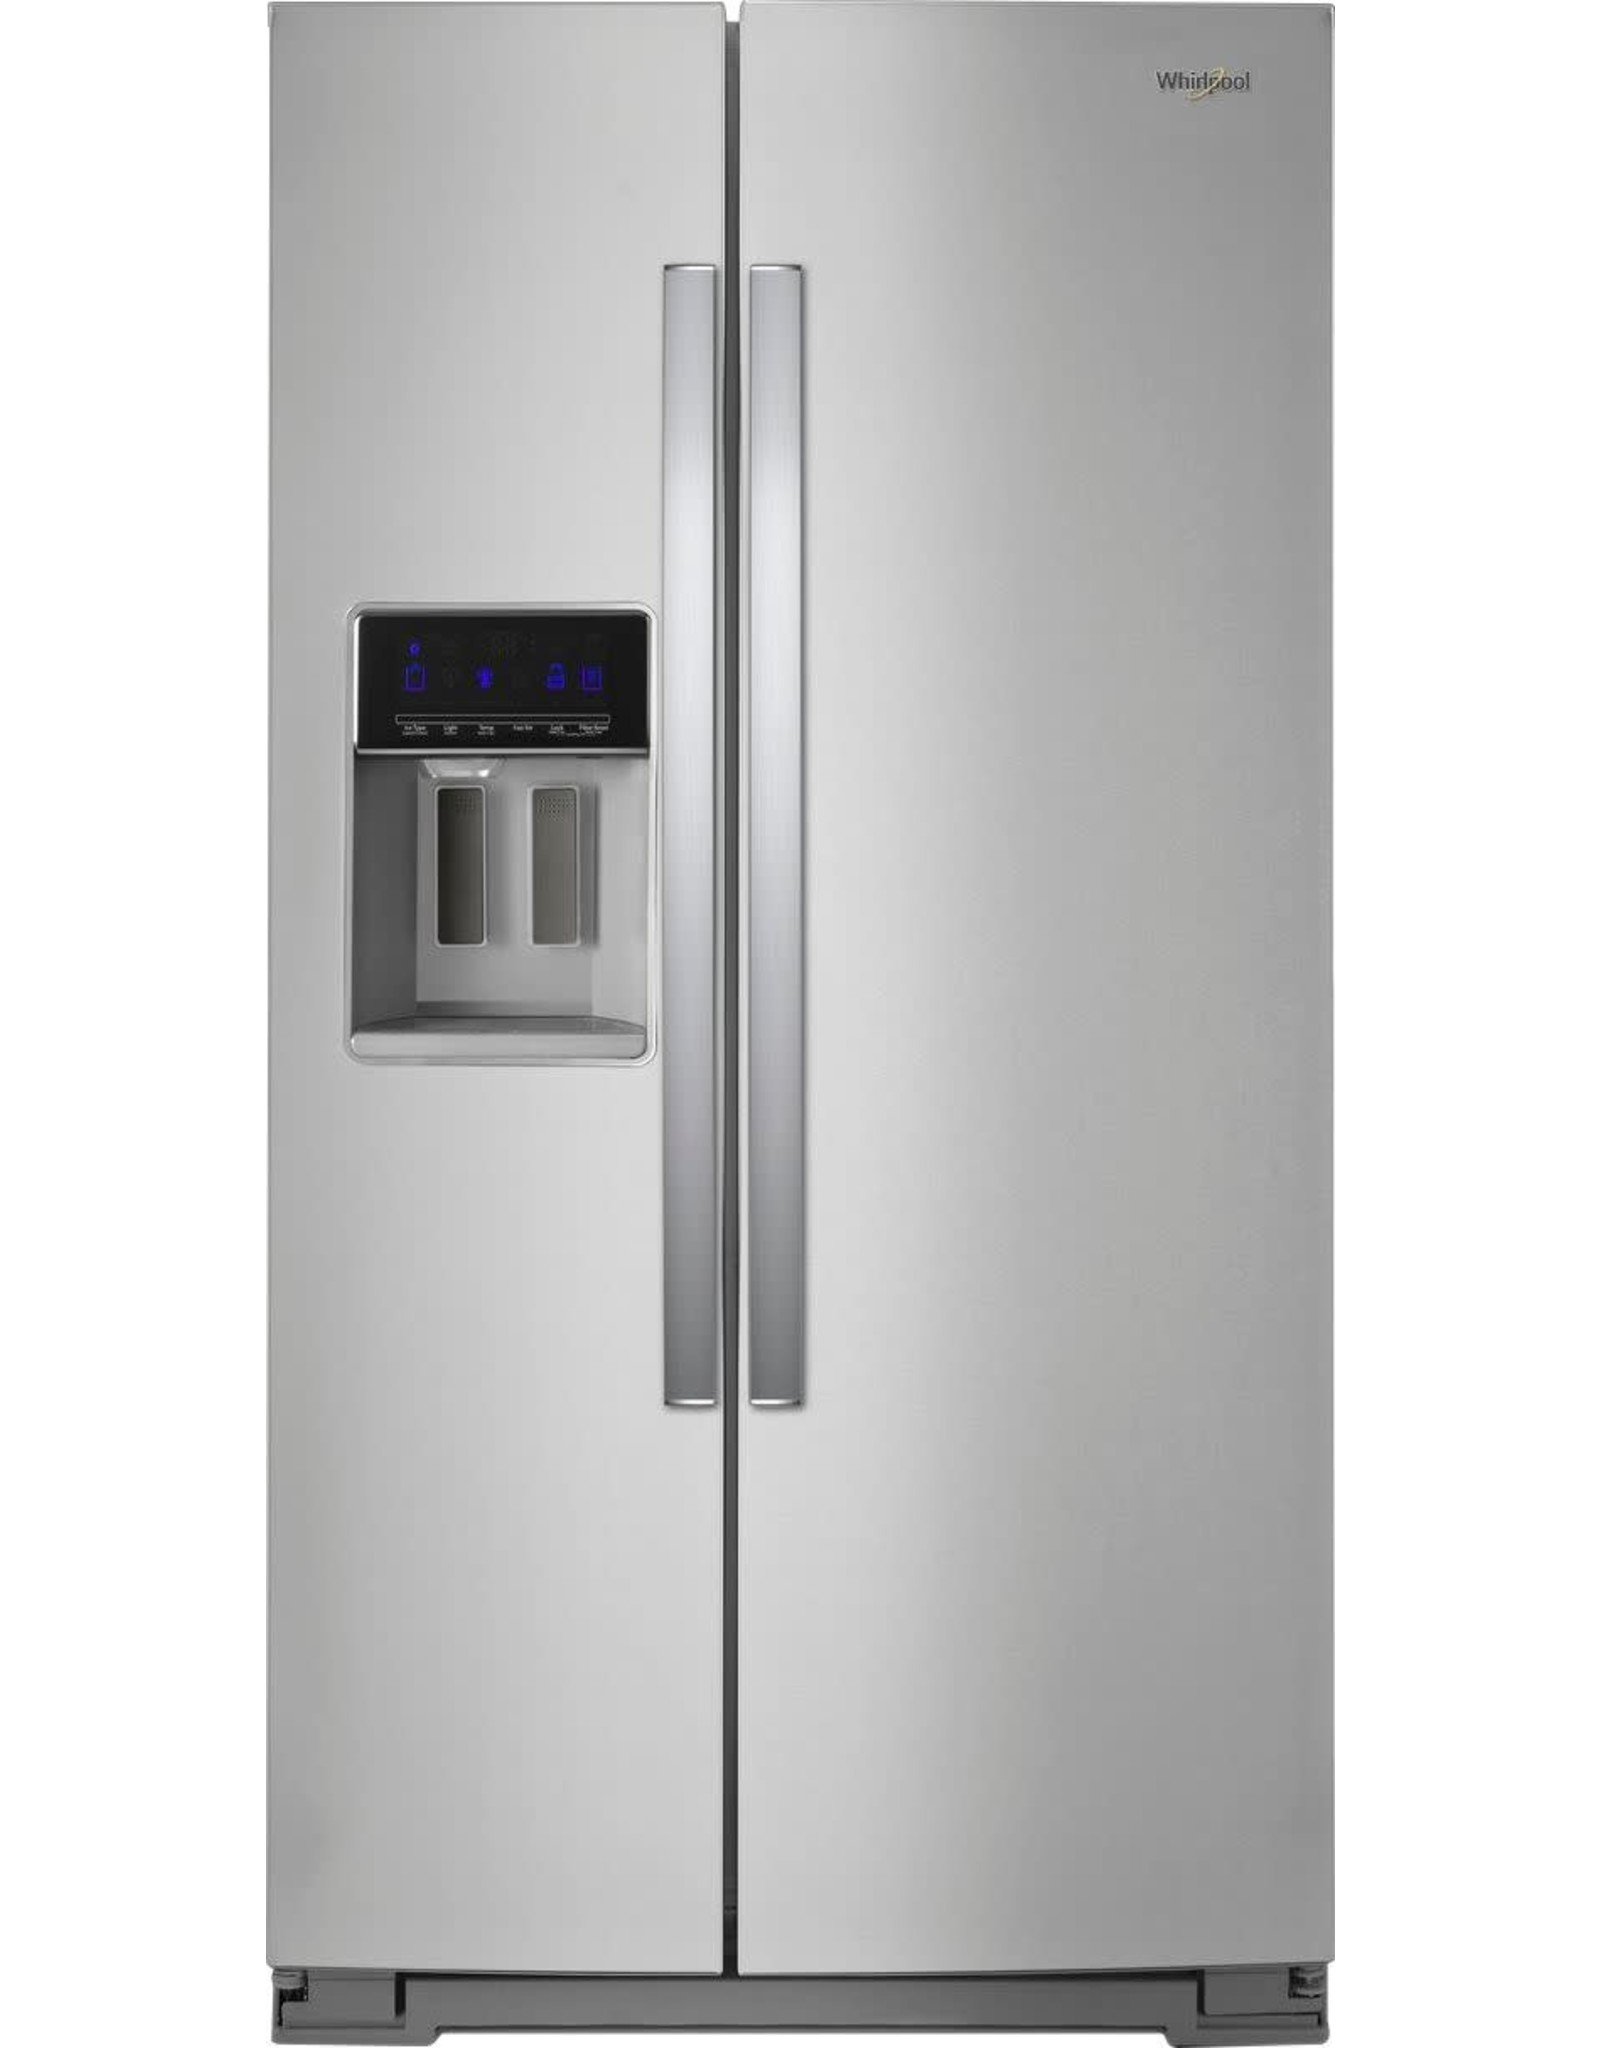 WRS588FIHZ Whirlpool - 28.4 Cu. Ft. Side-by-Side Refrigerator - Stainless steel